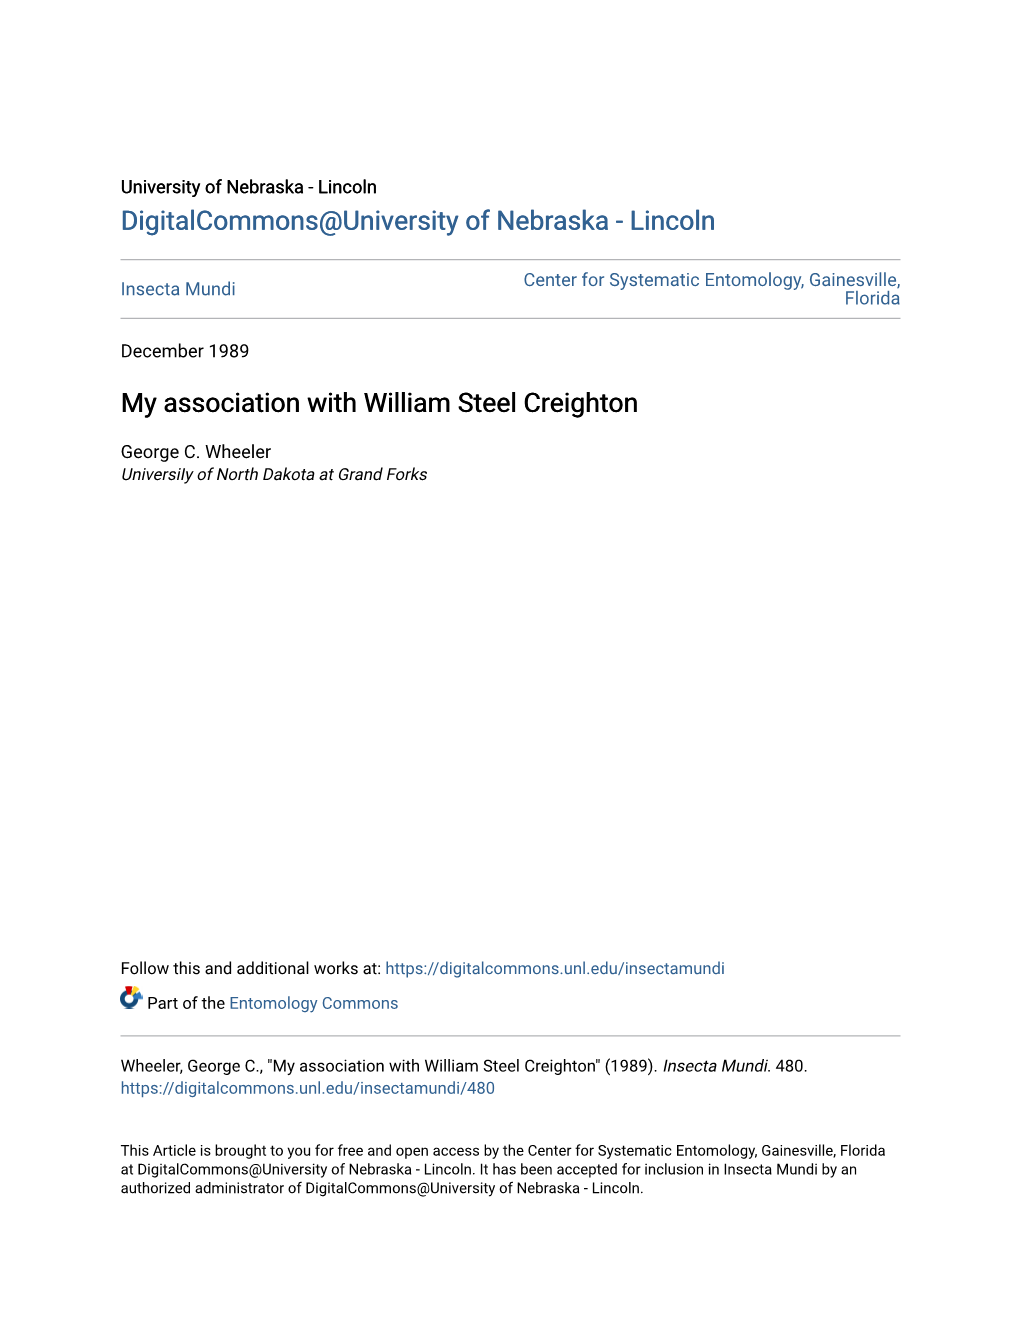 My Association with William Steel Creighton